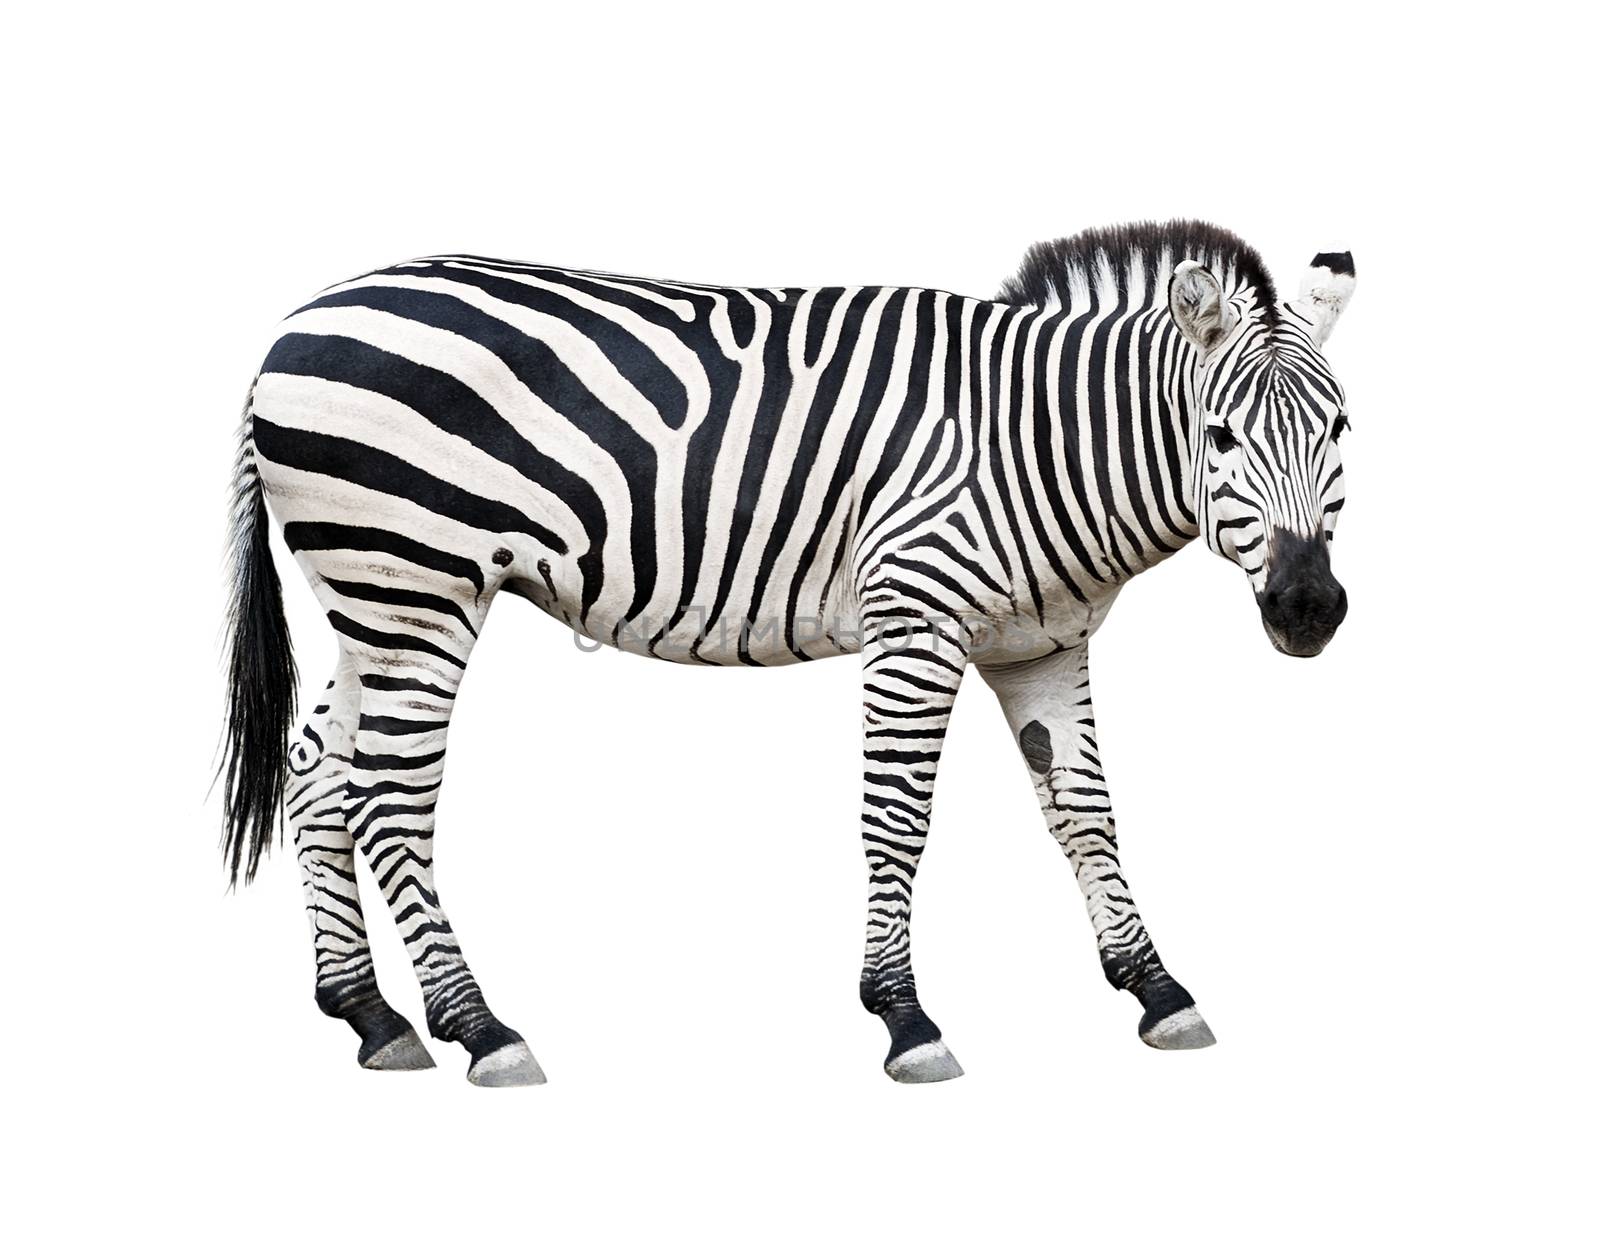 Zebra cutout by vkstudio